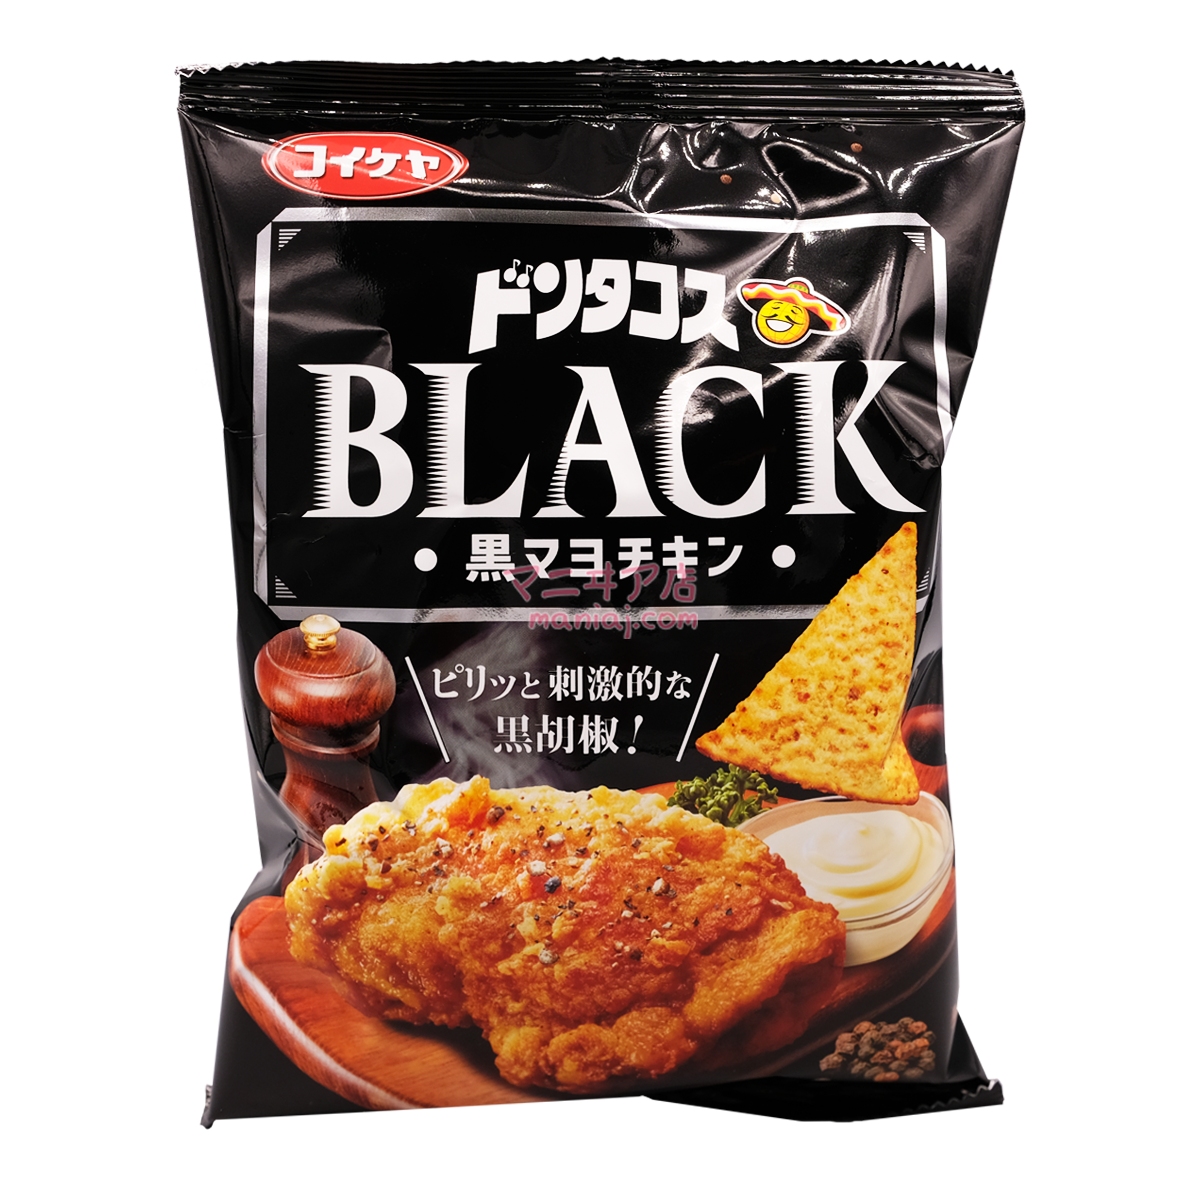 BLACK black mayonnaise chicken flavor crisps